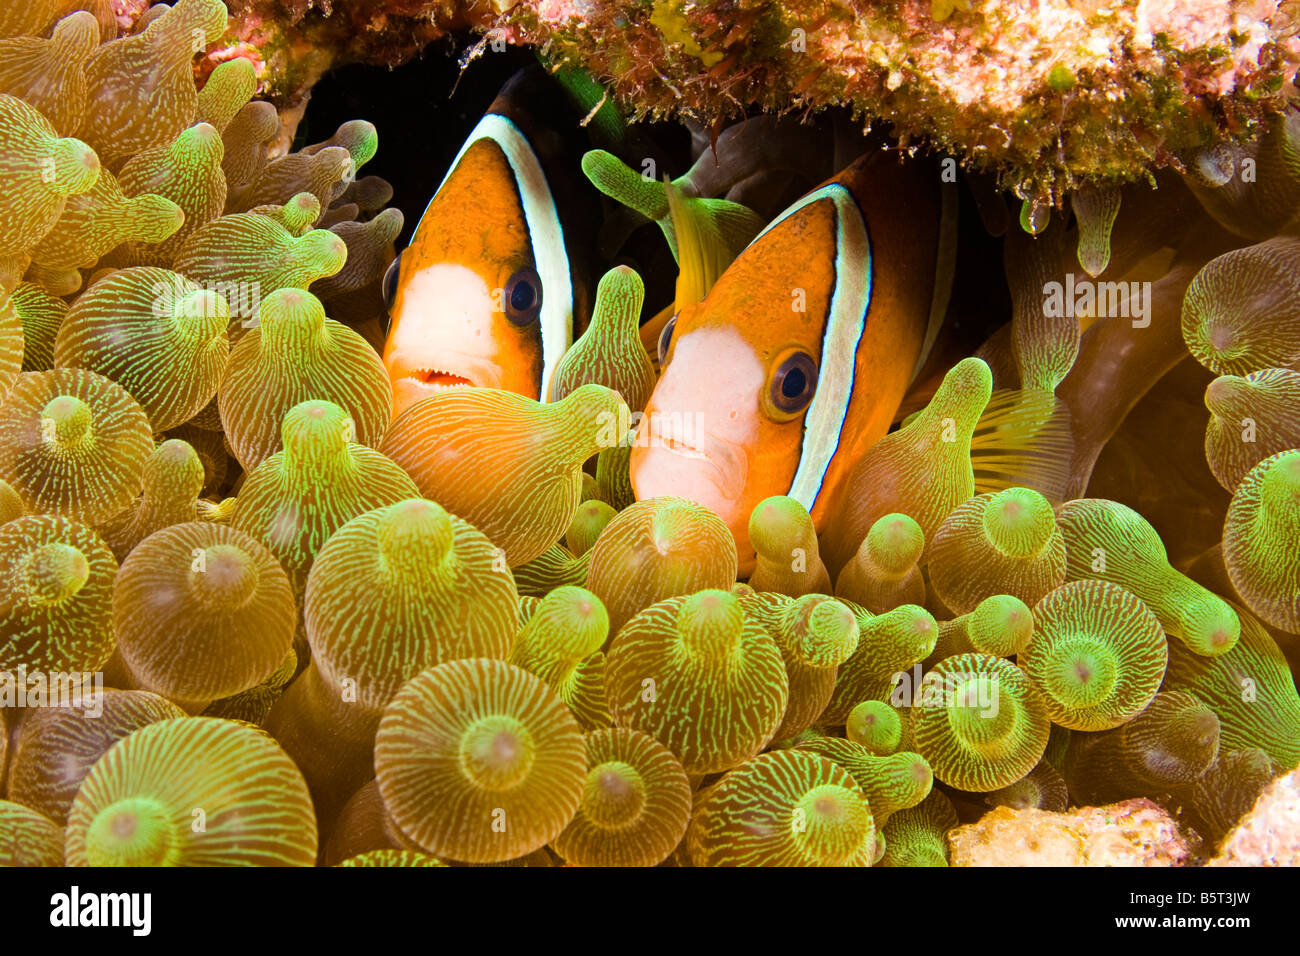 Clark's anemonefish, Amphiprion clarkii, in sea anemone, Entacmaea quadricolor, Komodo, Indonesia. Stock Photo